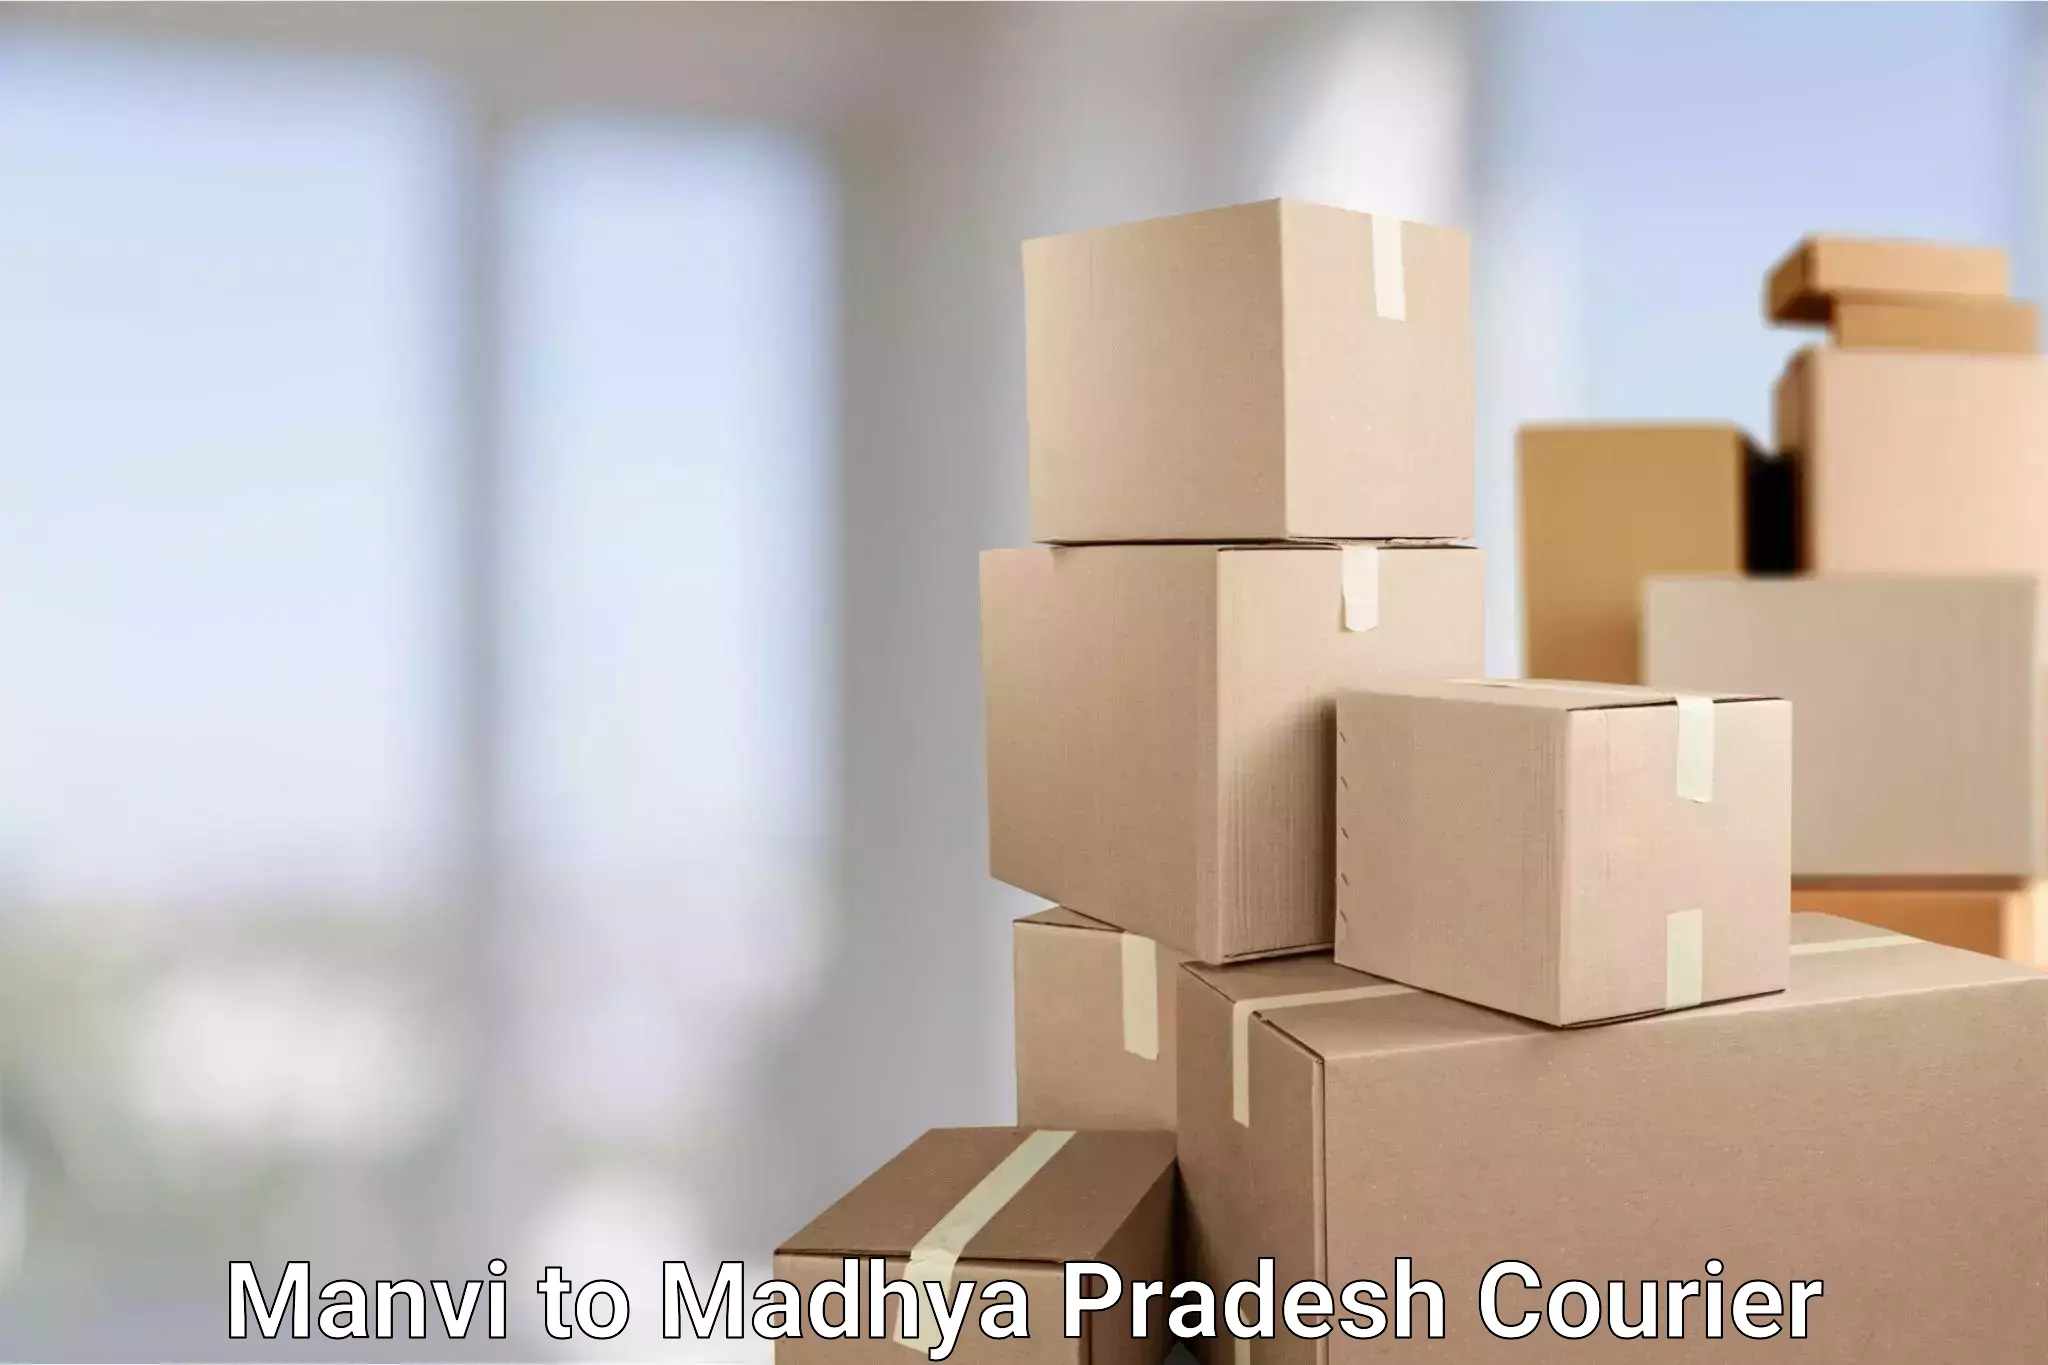 User-friendly courier app Manvi to Vidisha